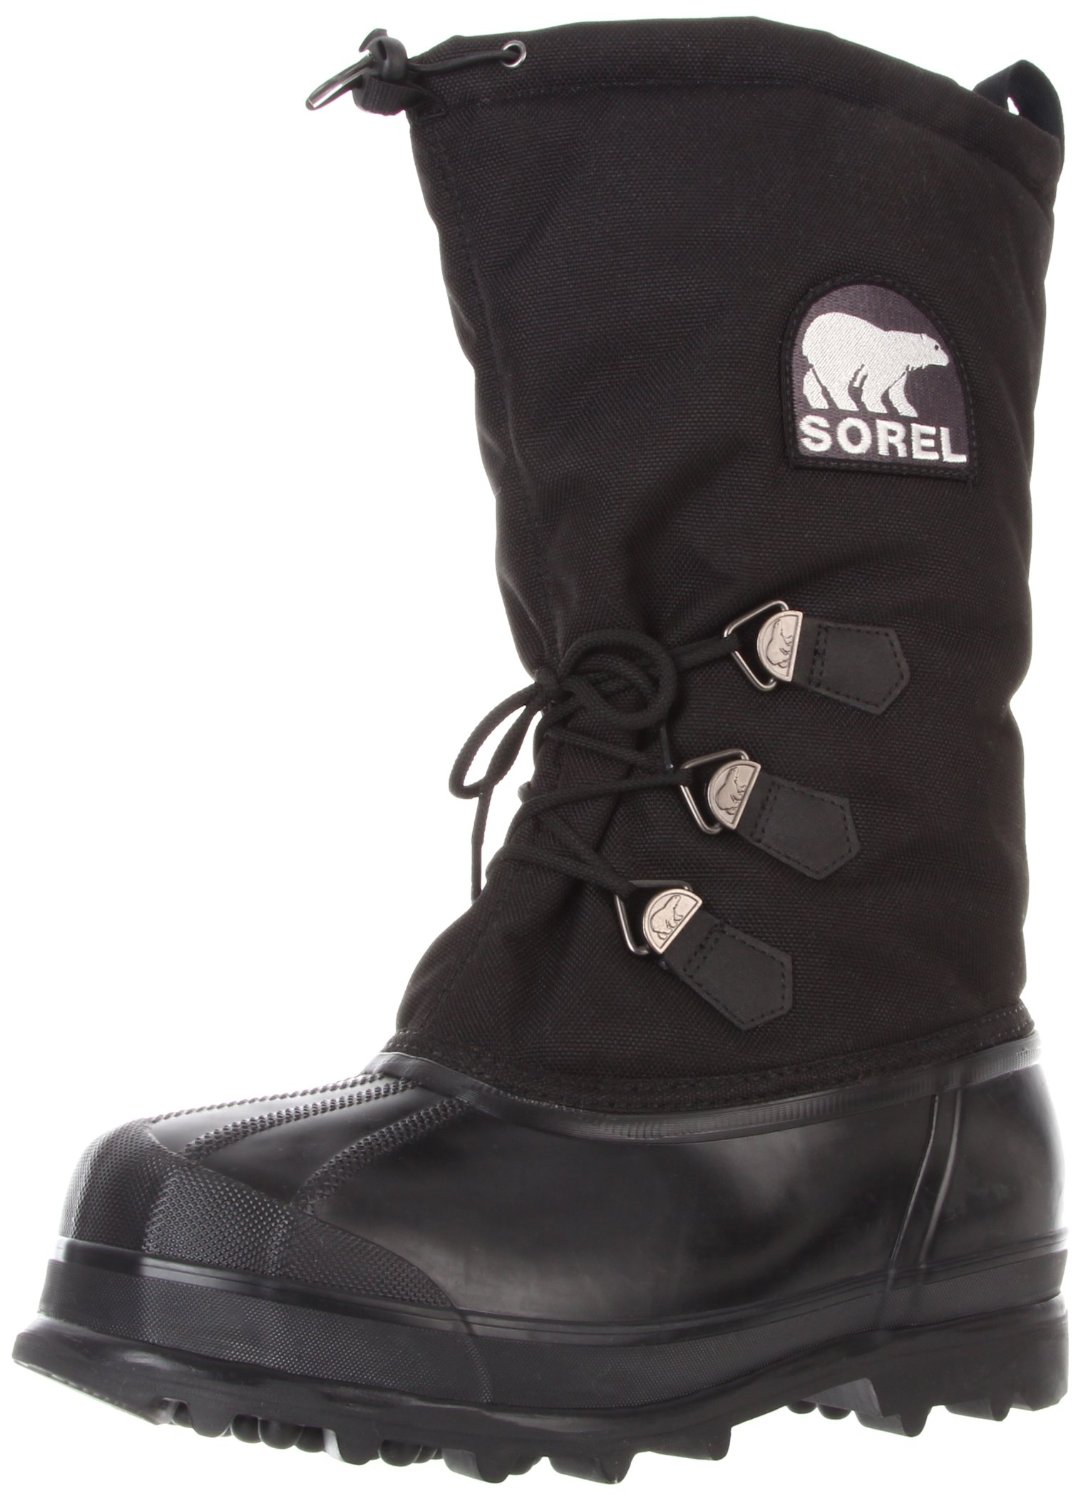 Sorel Glacier 男款雪地靴  $70.98